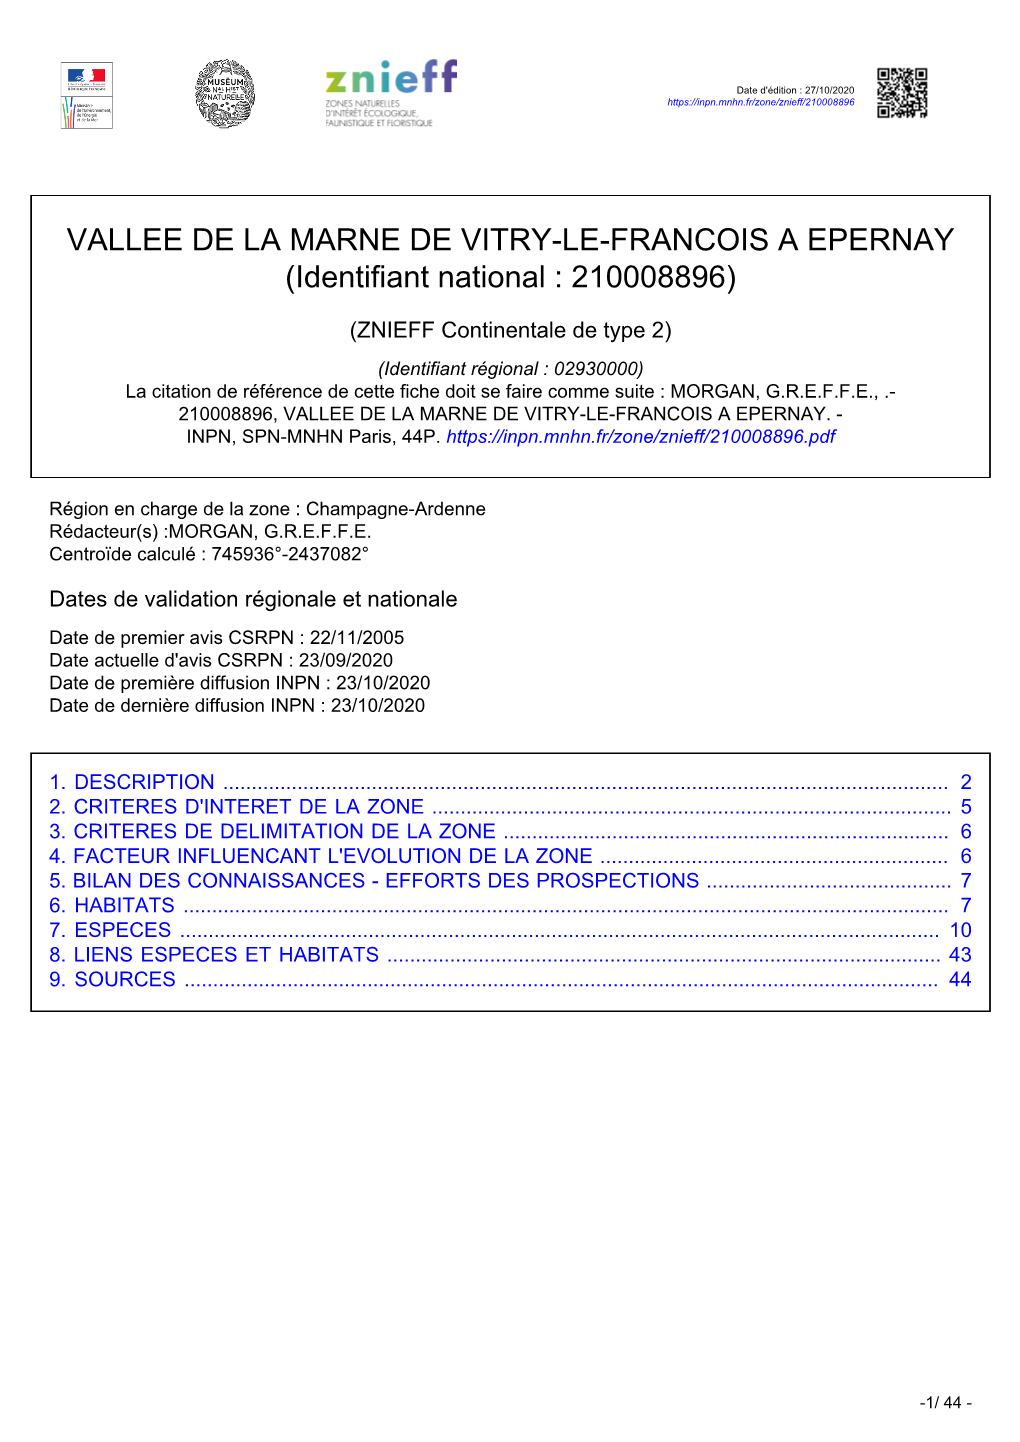 VALLEE DE LA MARNE DE VITRY-LE-FRANCOIS a EPERNAY (Identifiant National : 210008896)